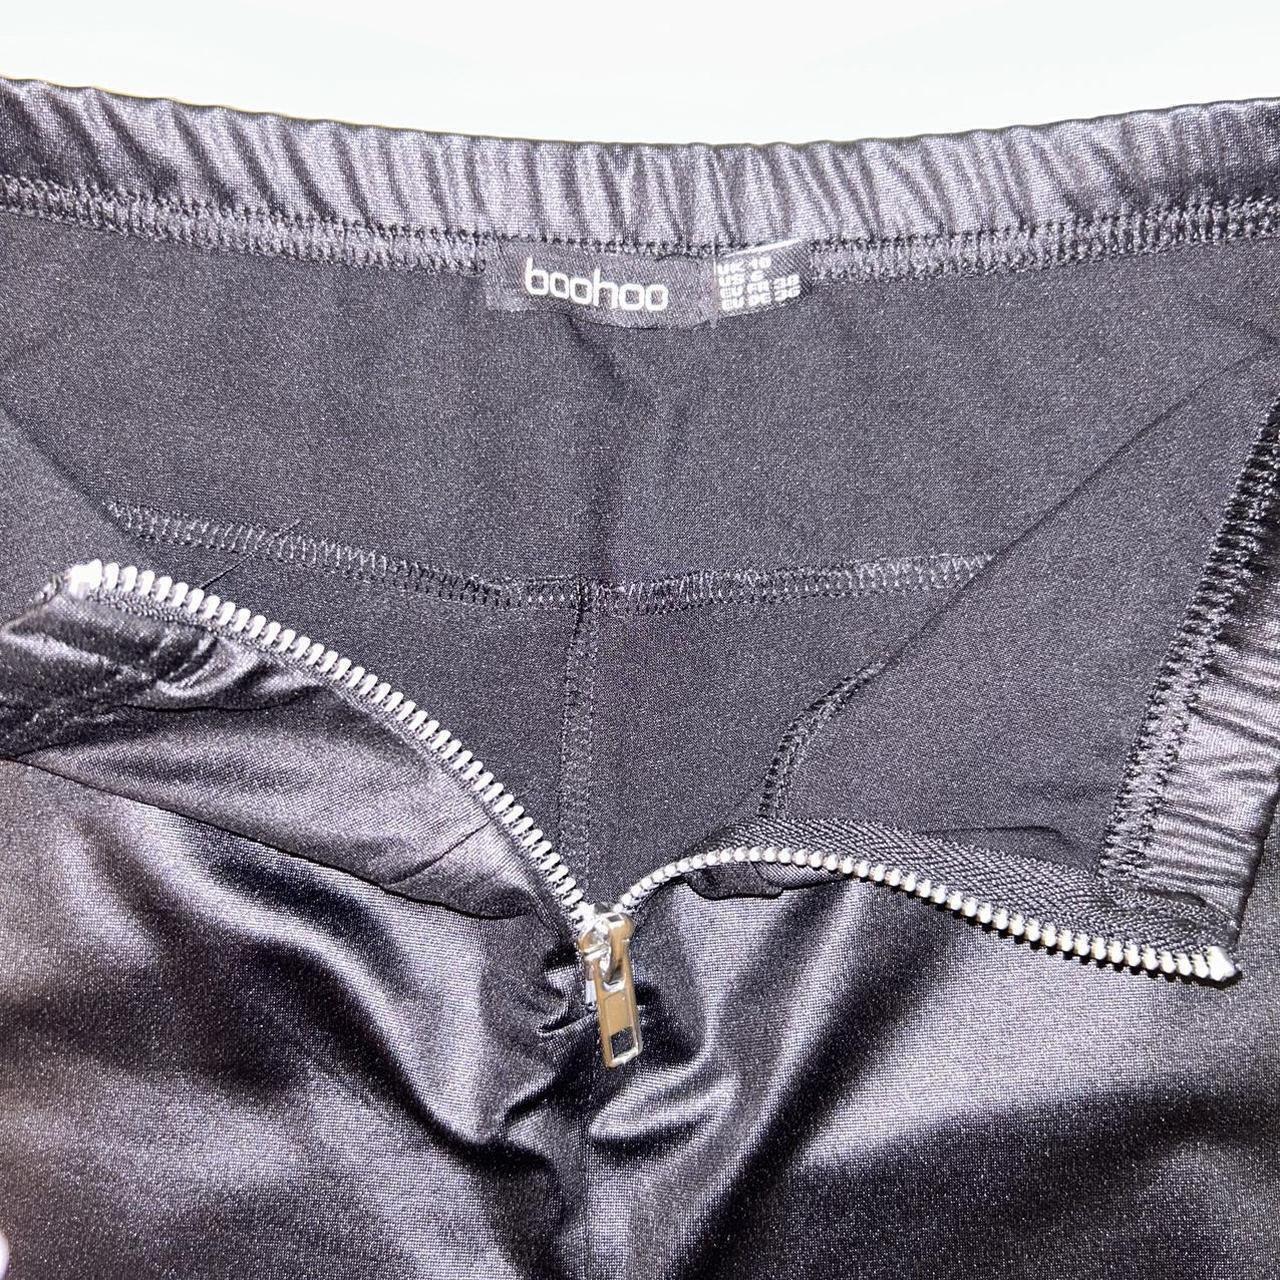 Boohoo leather leggings. Size 6 #leatherleggings - Depop